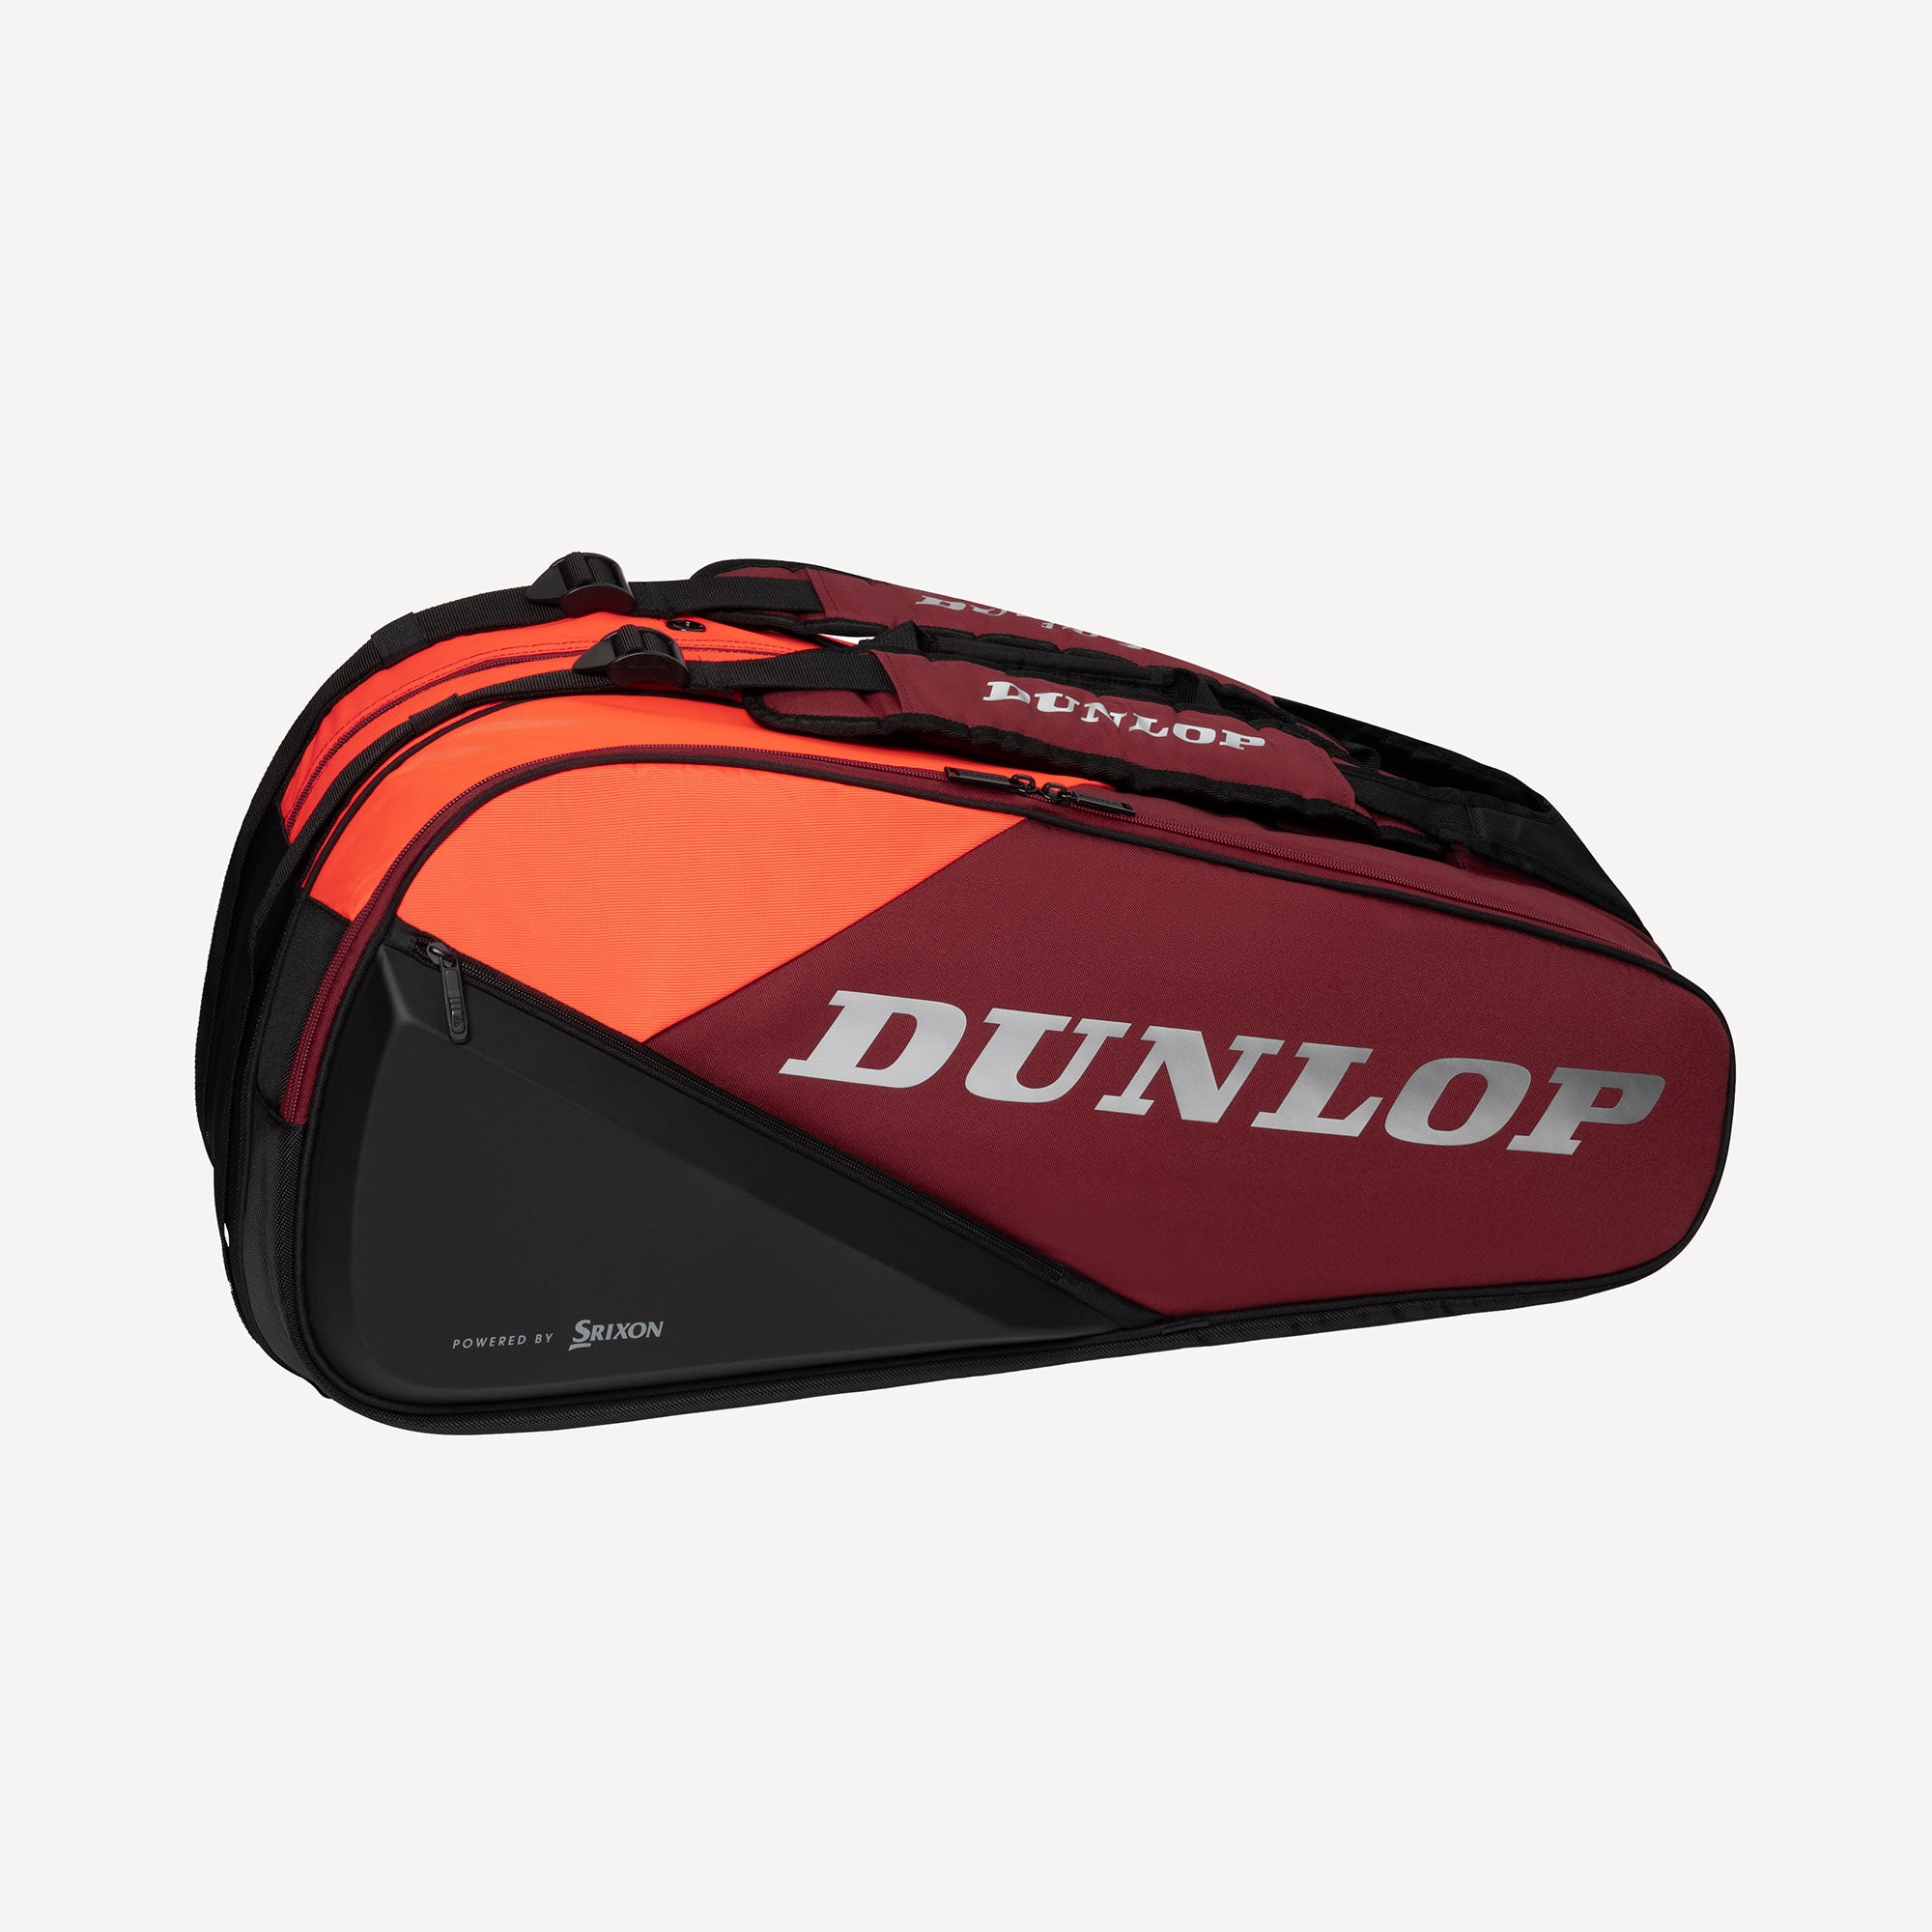 Dunlop CX Performance 12 Racket Tennis Bag - Red (1)